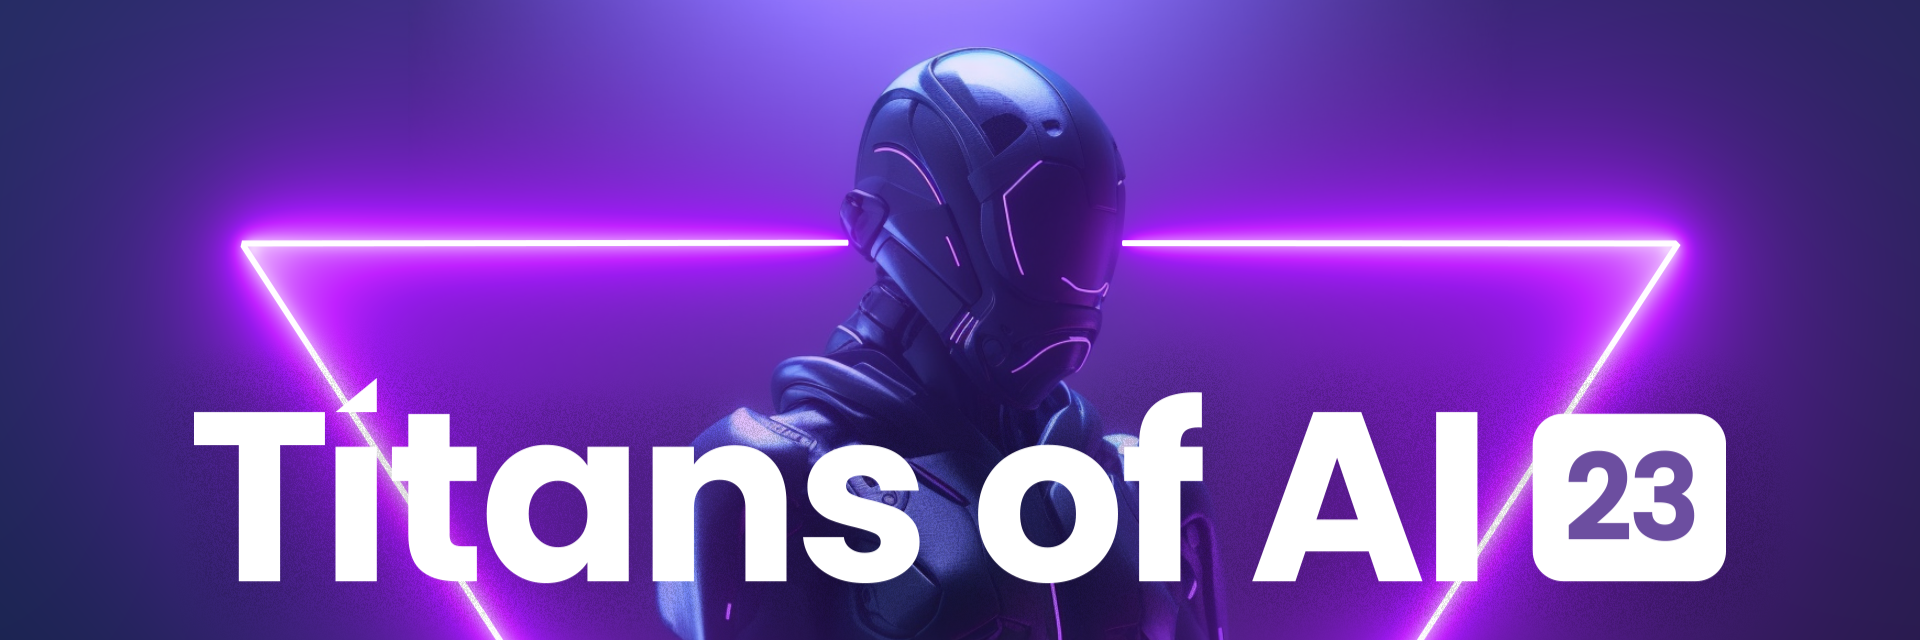 Titans of AI | Washington, DC (Arlington)